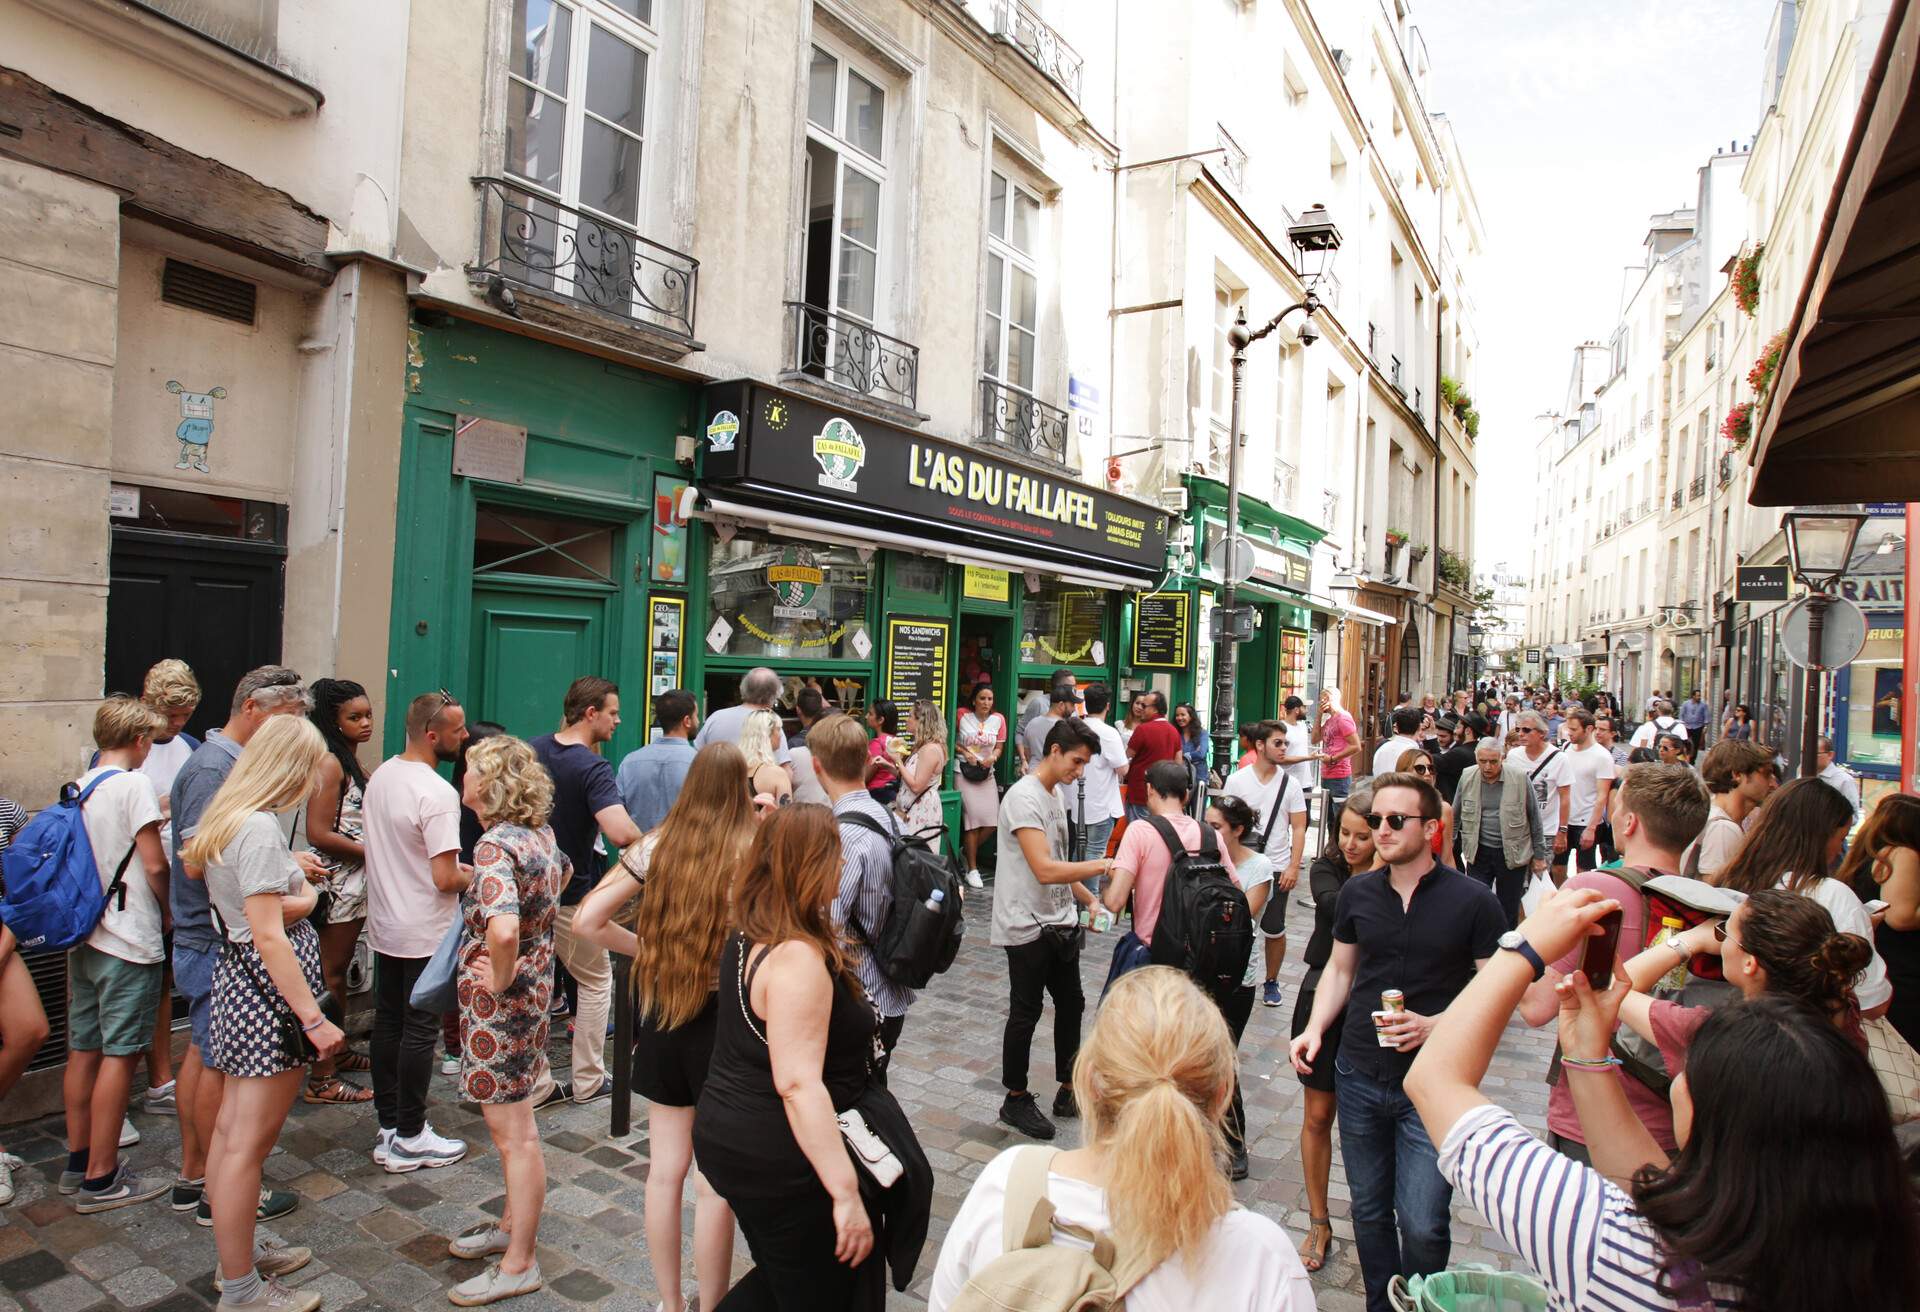 Paris,France - August 14: Tourists enjoying on the rue de Rosiers street in Le Marais district of Paris. The Le Marais district is one of Paris' main Jewish communities.